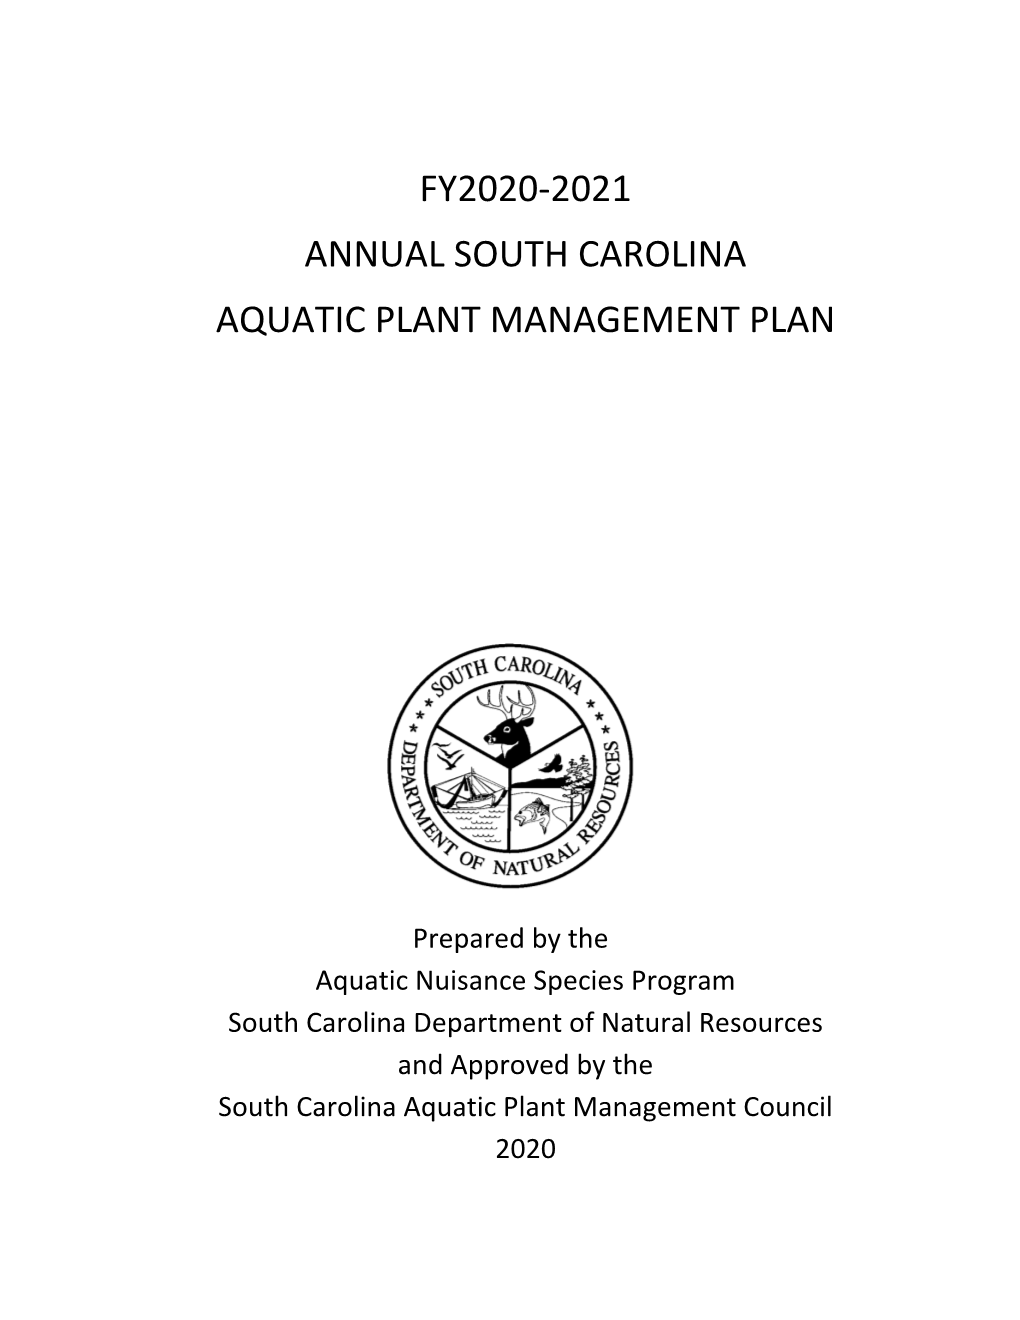 2020-2021 Annual South Carolina Aquatic Plant Management Plan